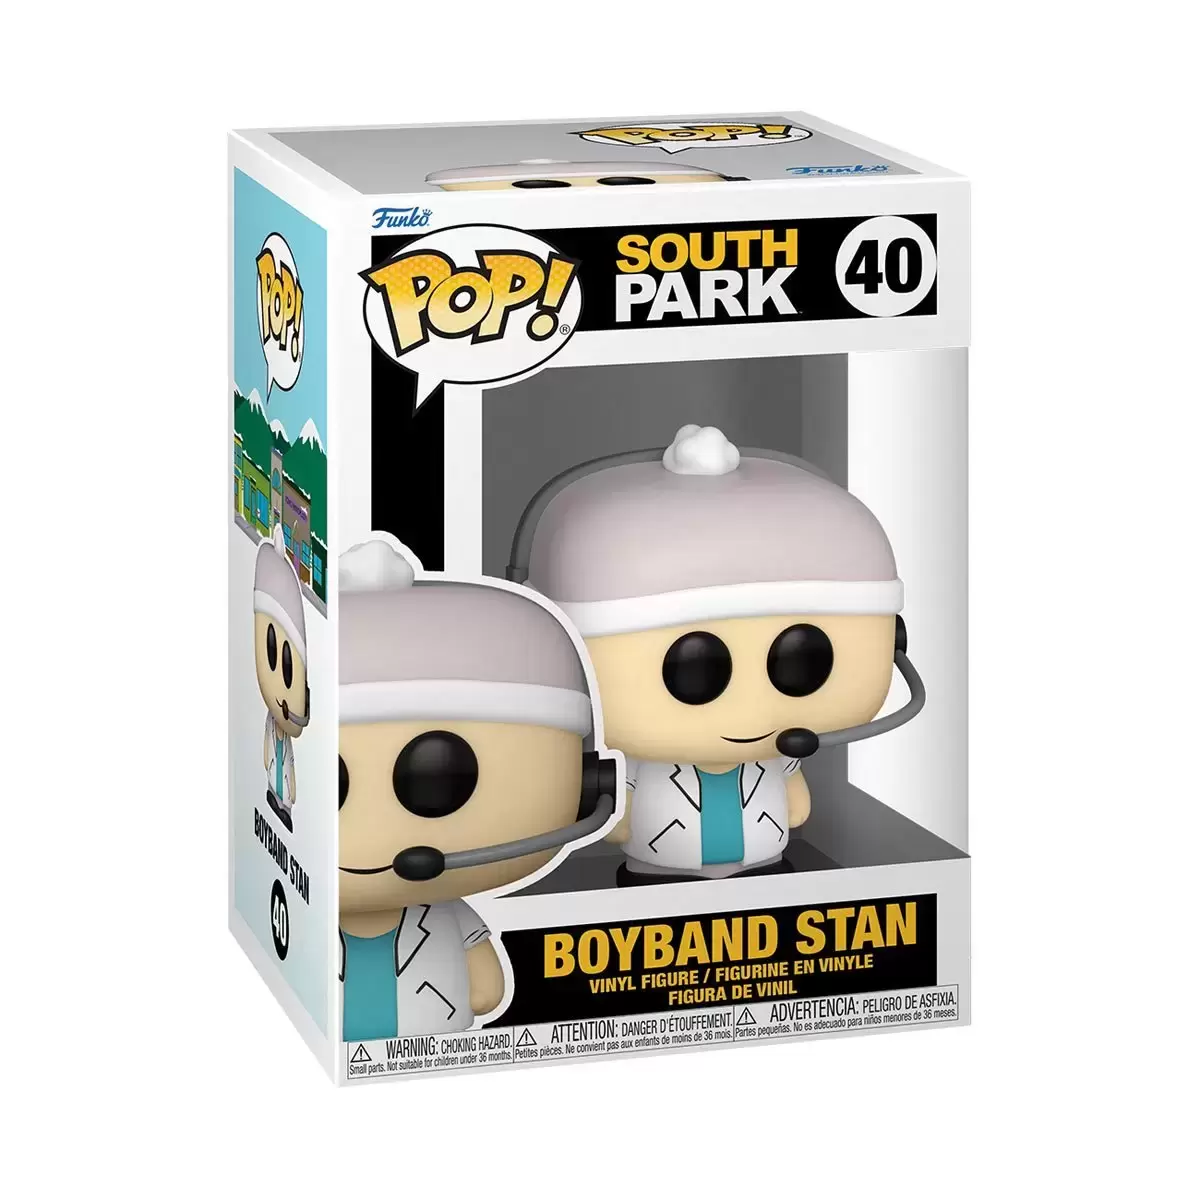 POP! South Park - South Park - Boyband Stan